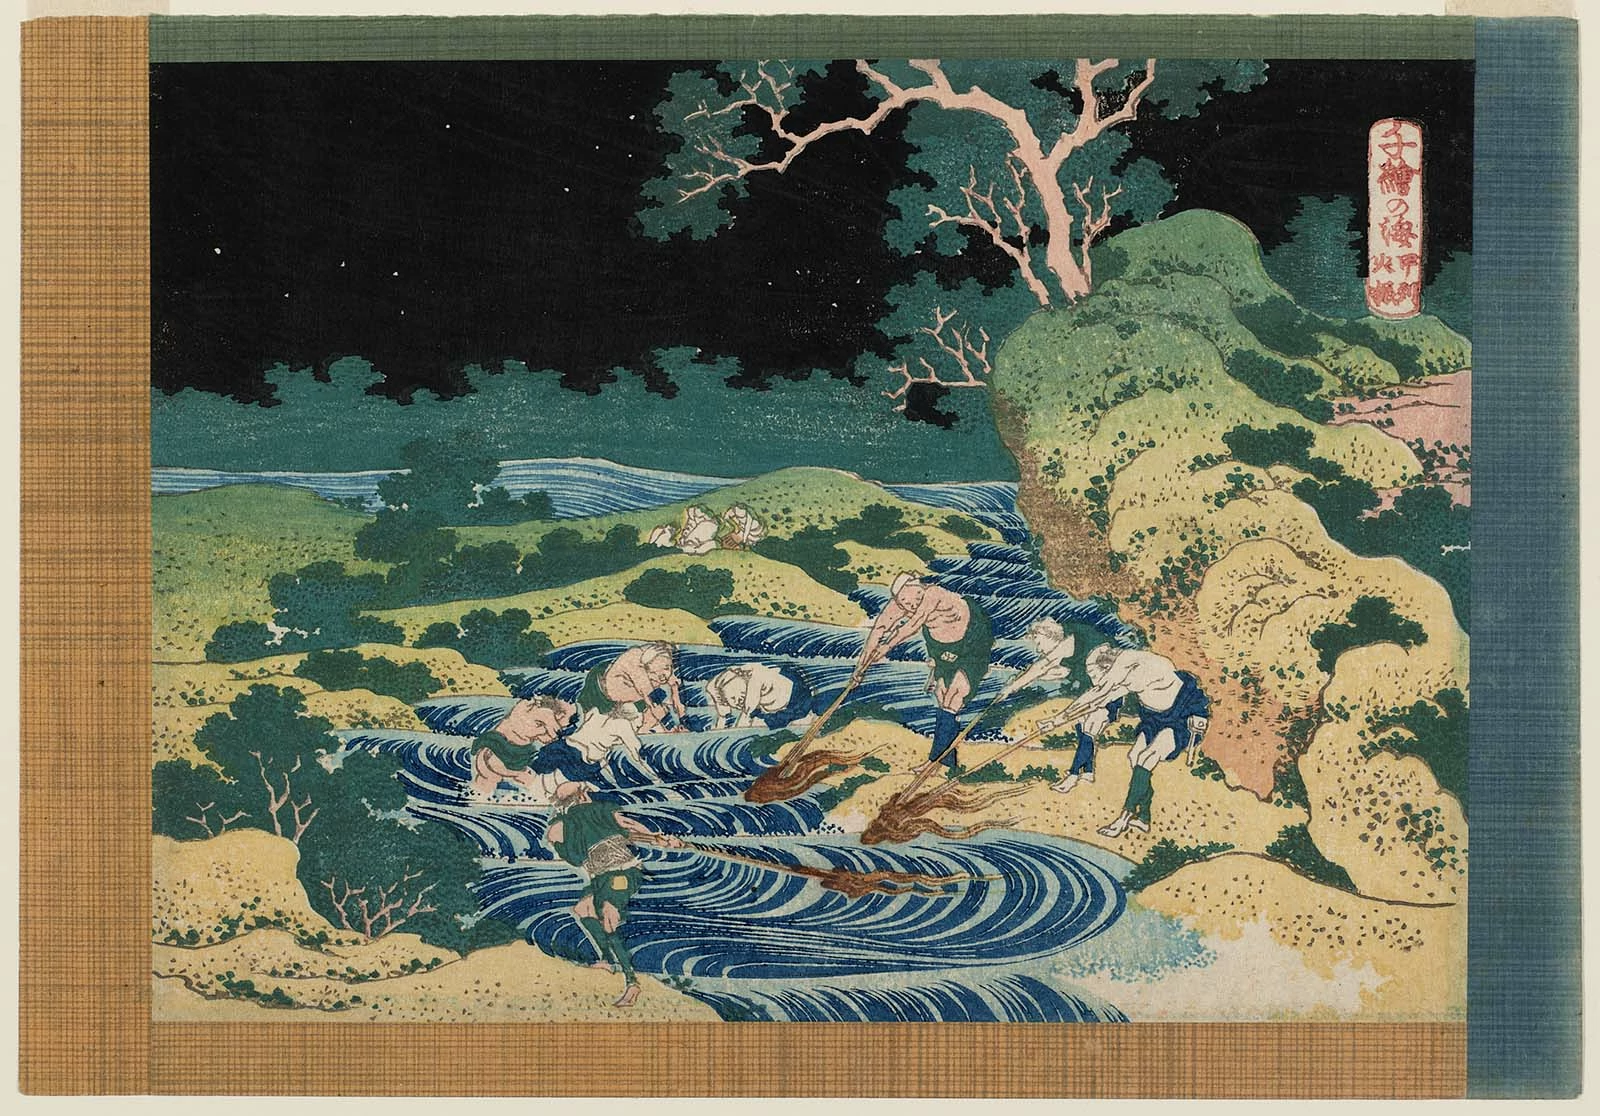 Fishing by Torchlight in Kai Province, Katsushika Hokusai